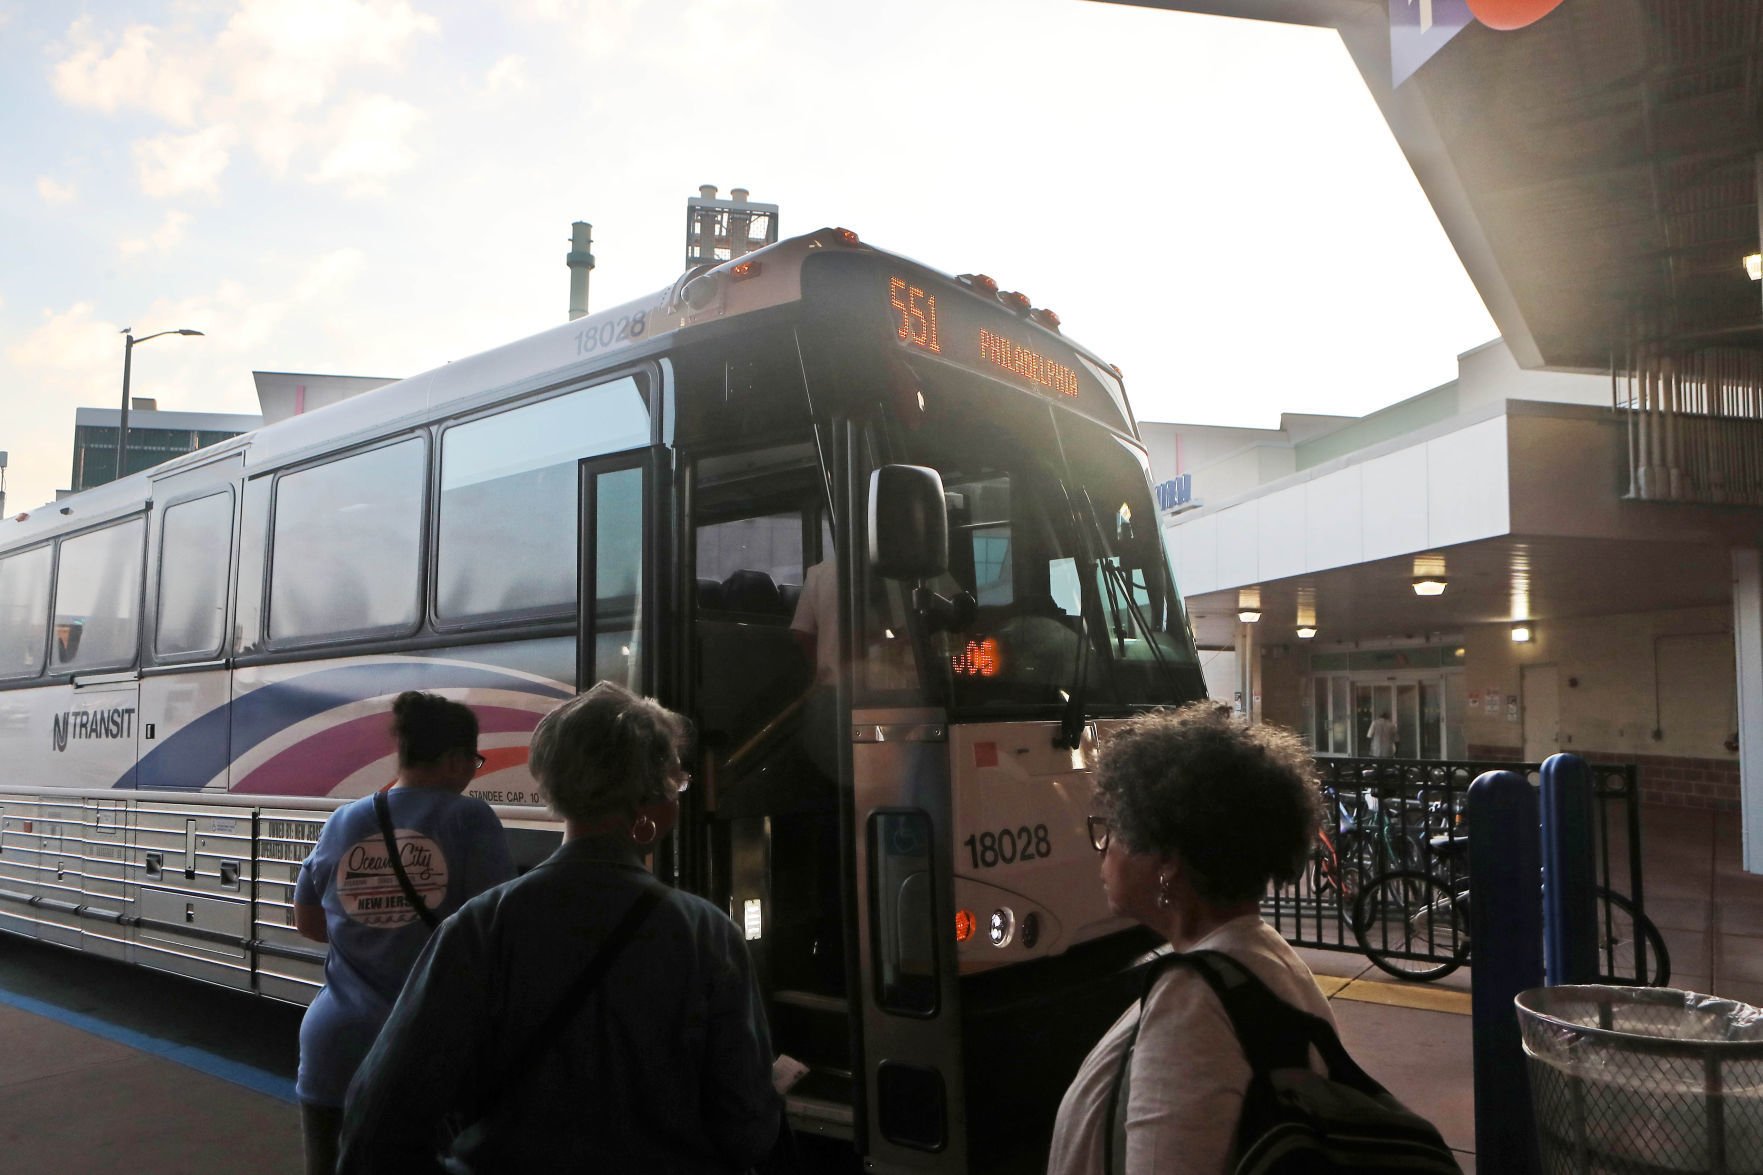 bus service from philadelphia airport to atlantic city